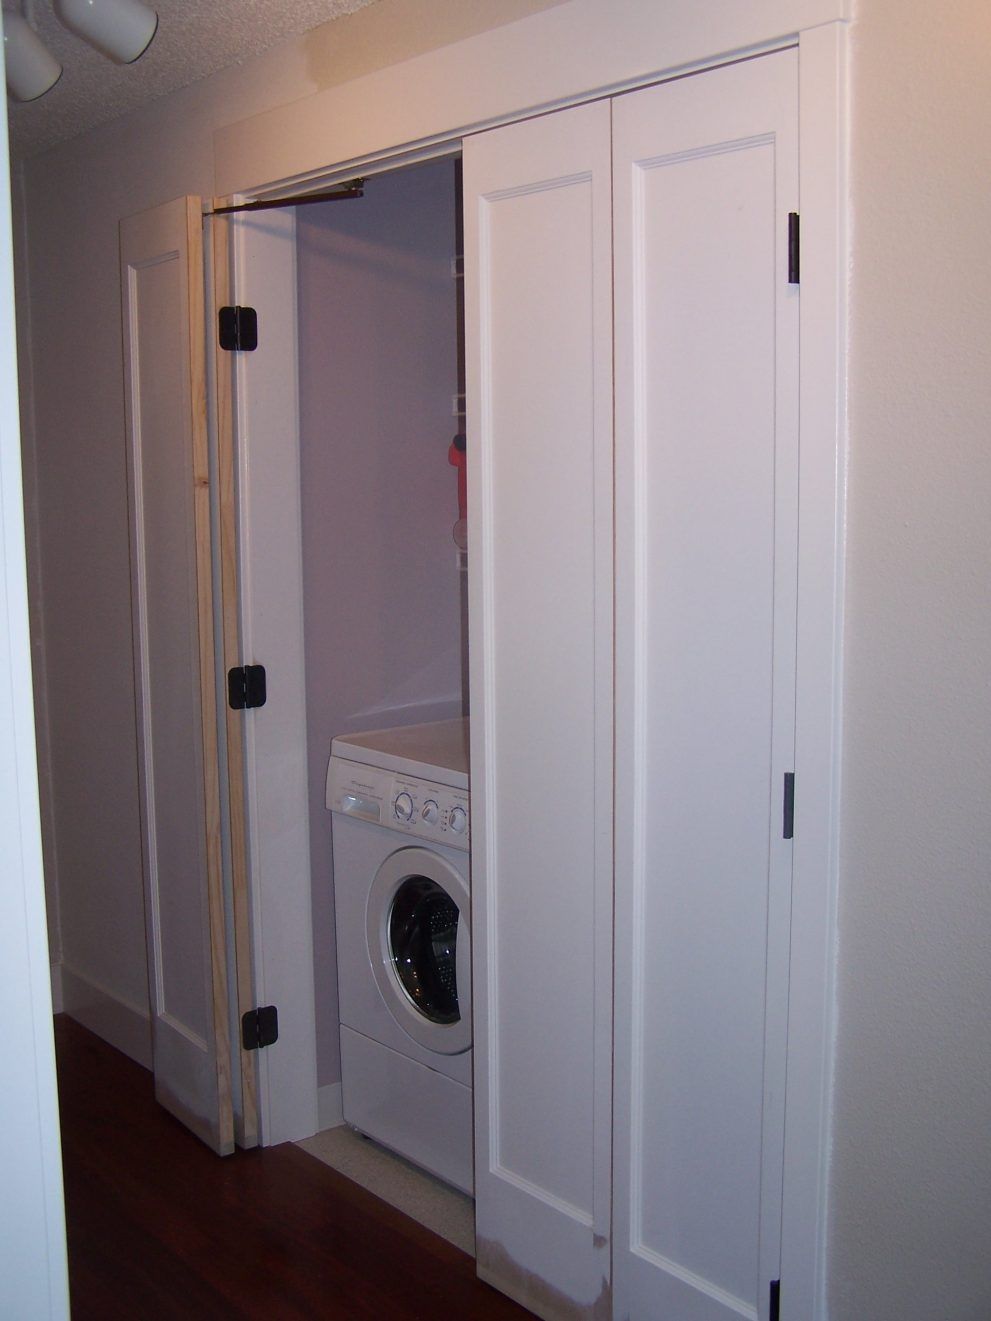 Laundry Closet Door Idea